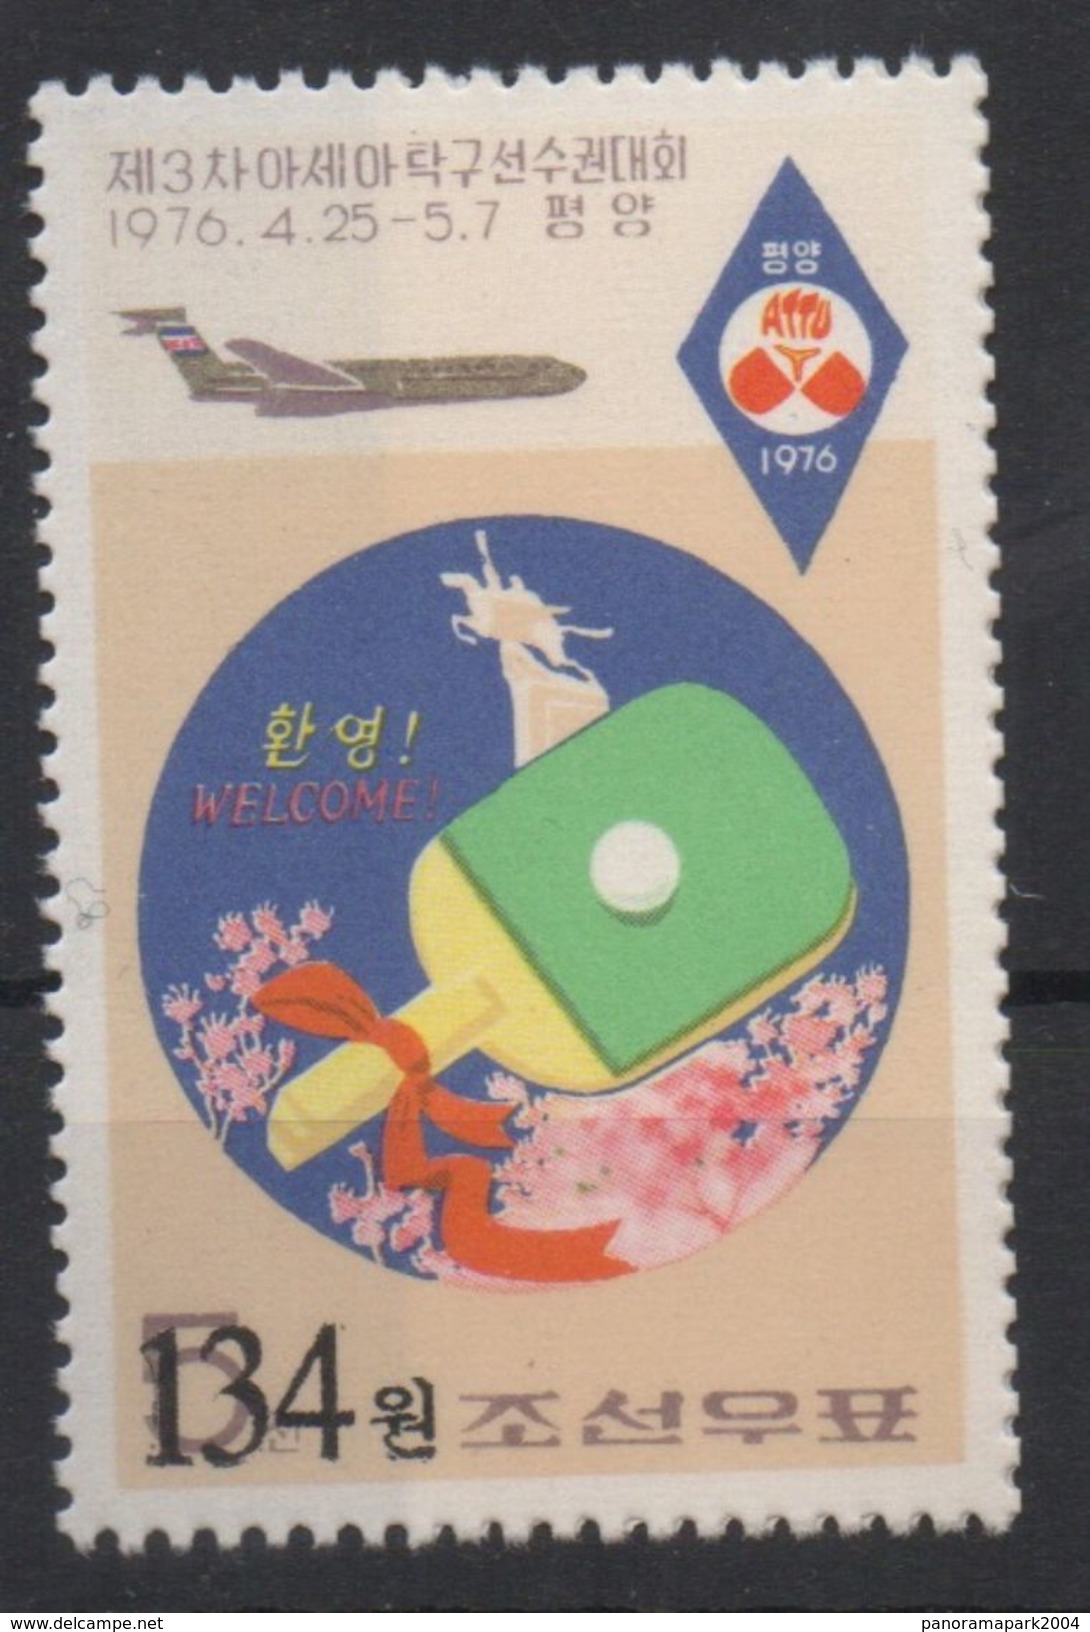 North Korea Corée Du Nord 2006 Mi. 5108 Surchargé OVERPRINT Tennis De Table Table Tennis Ping Pong Tischtennis MNH** RAR - Tischtennis